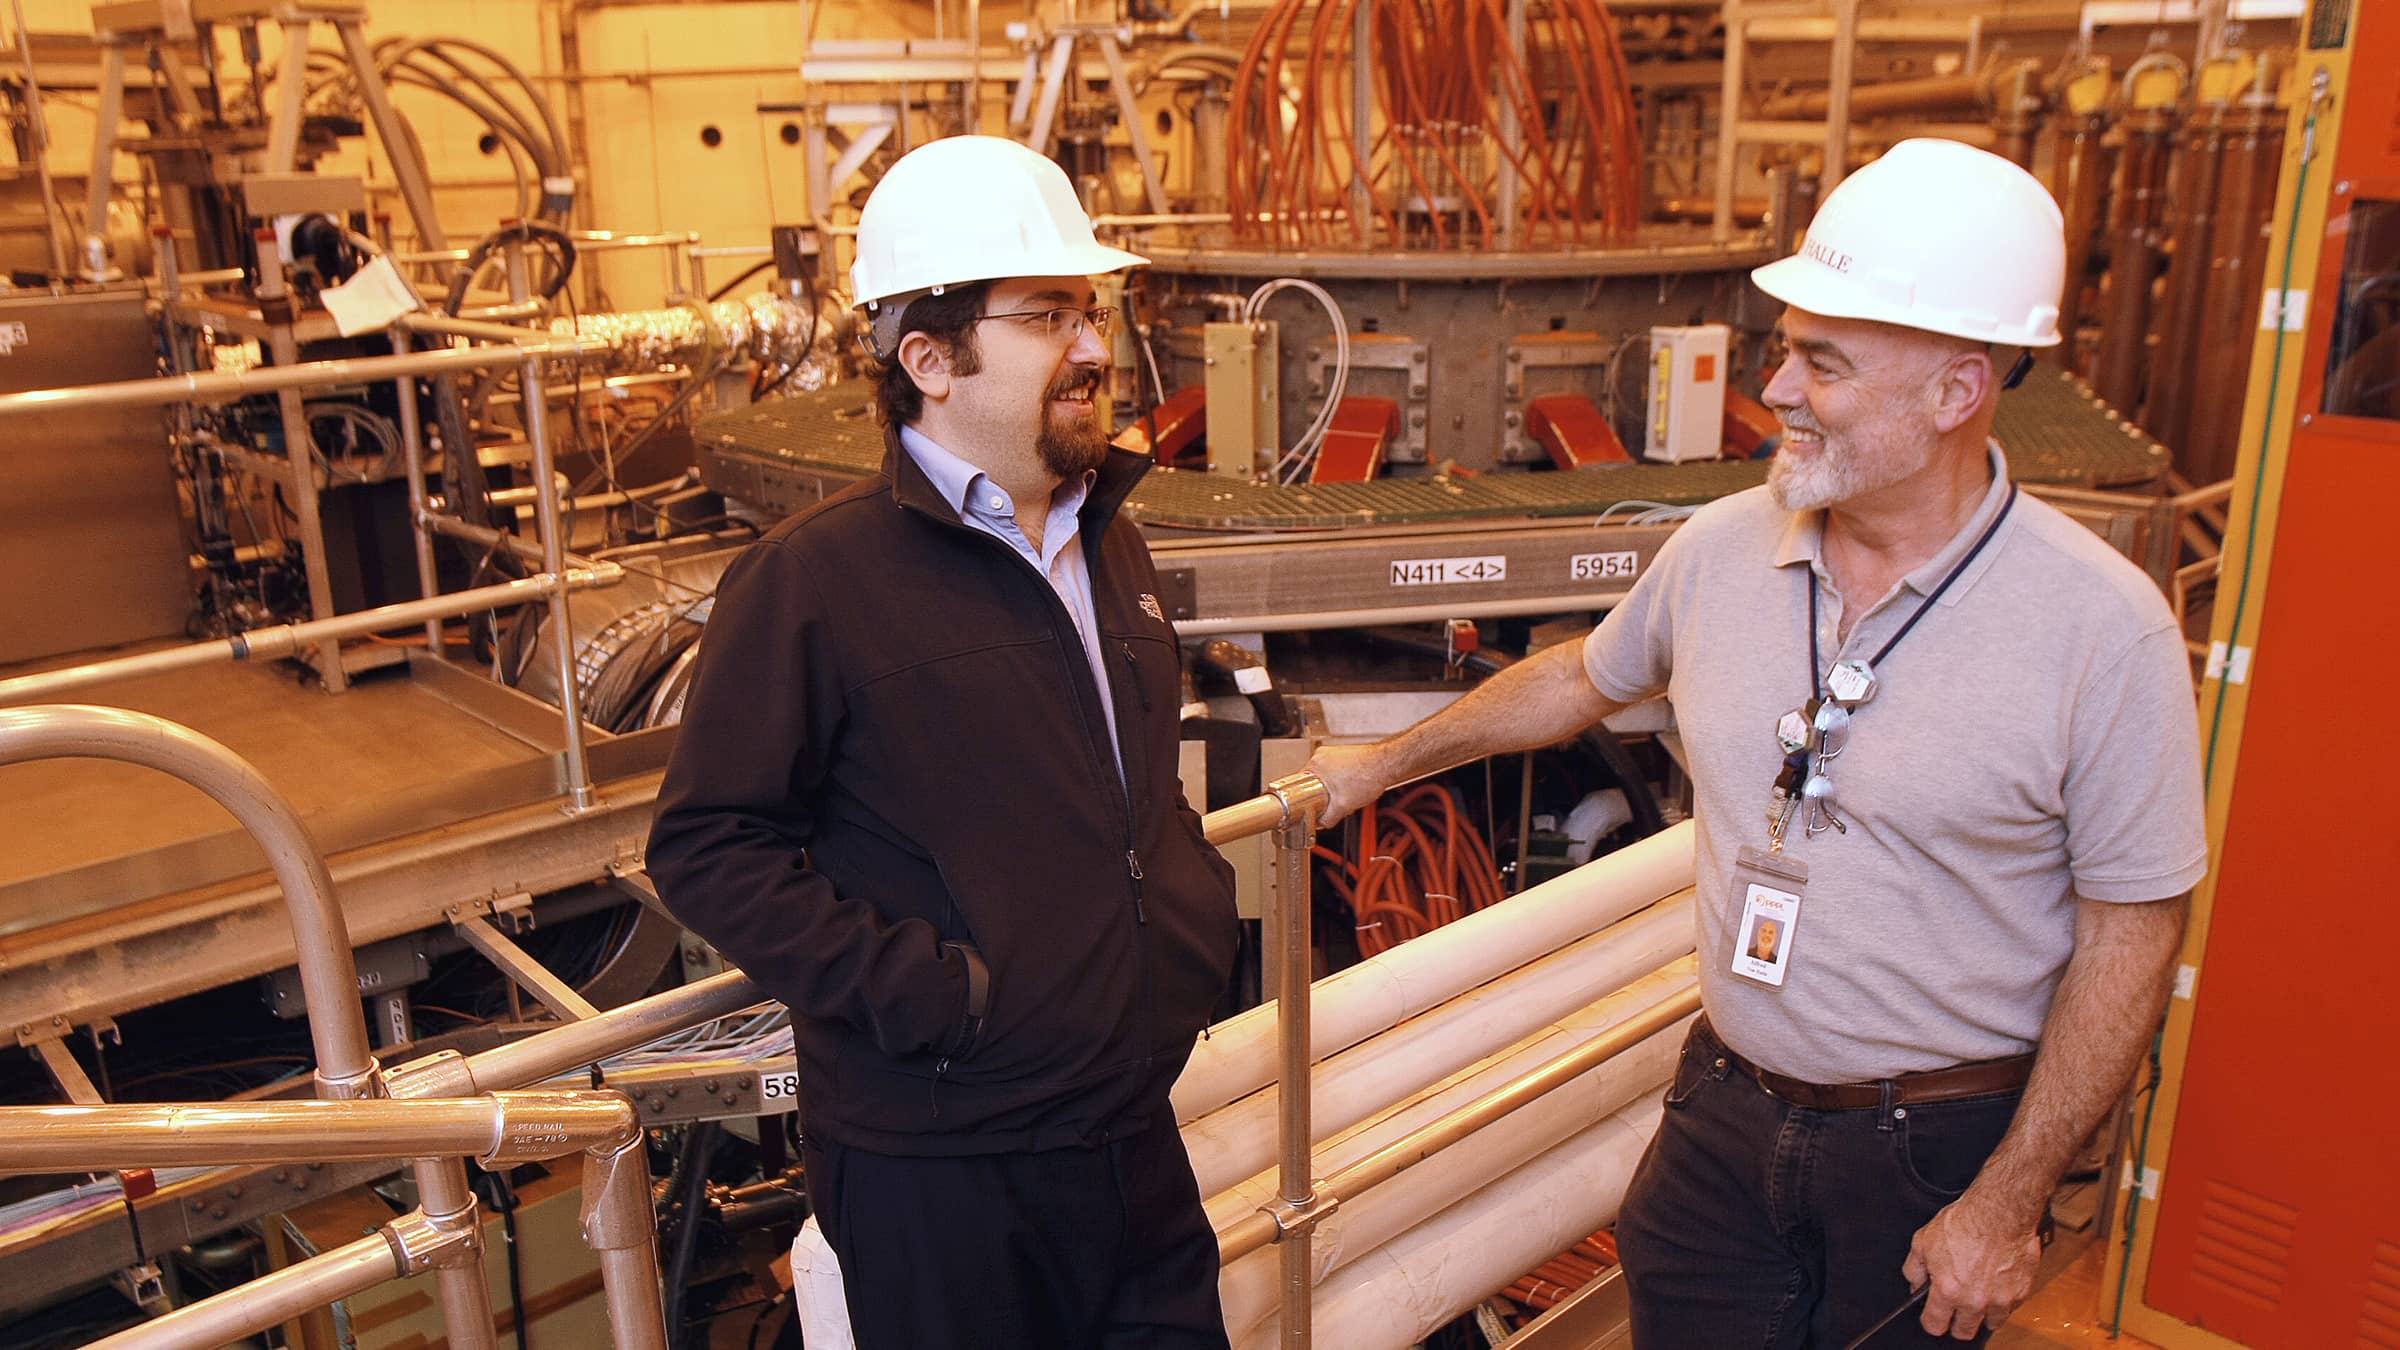 Egeman Koleman speaks with Al von Halle at Princeton Plasma Physics Laboratory. They are wearing hard hats.